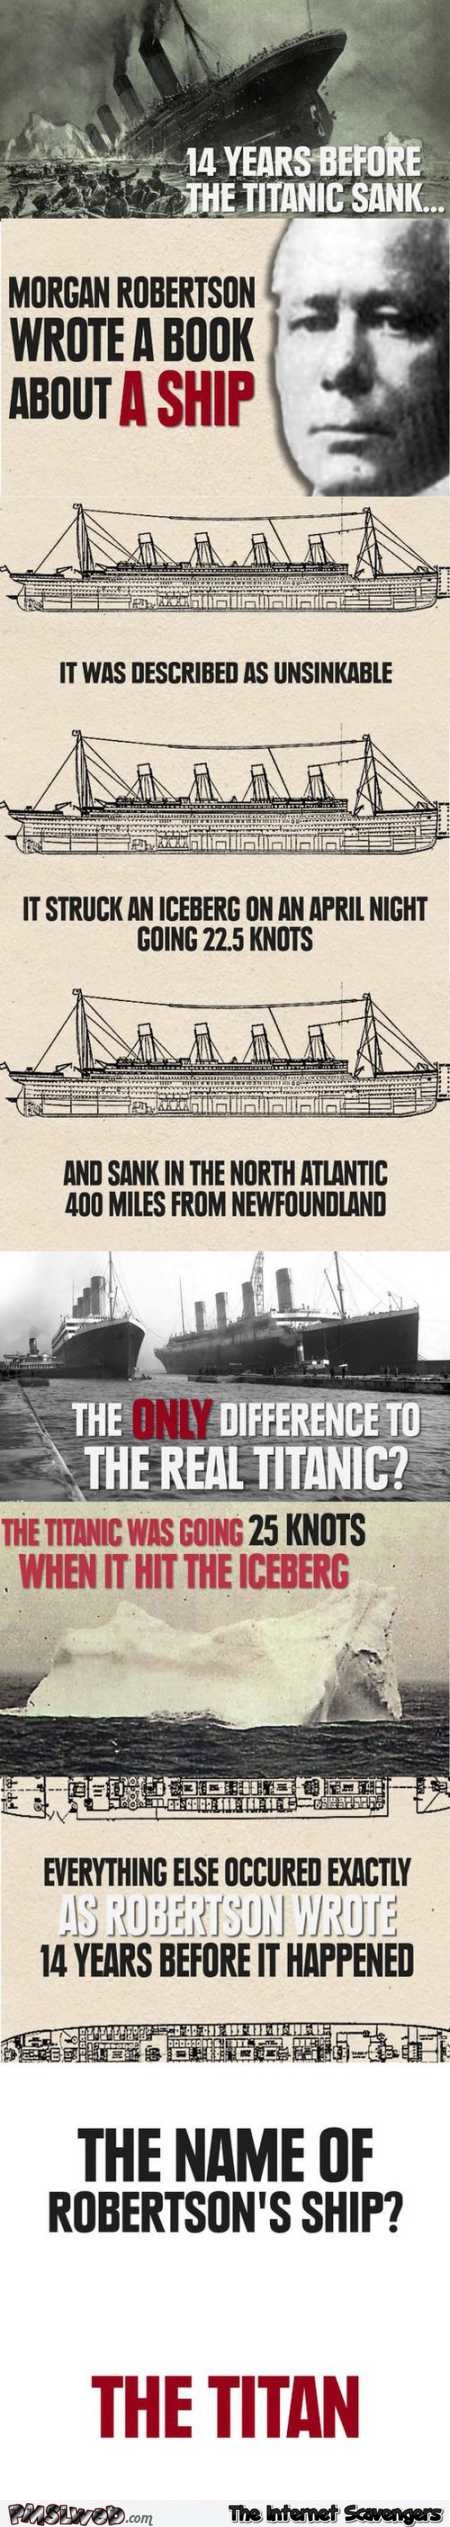 Morgan Robertson predicts Titanic’s sinking @PMSLweb.com